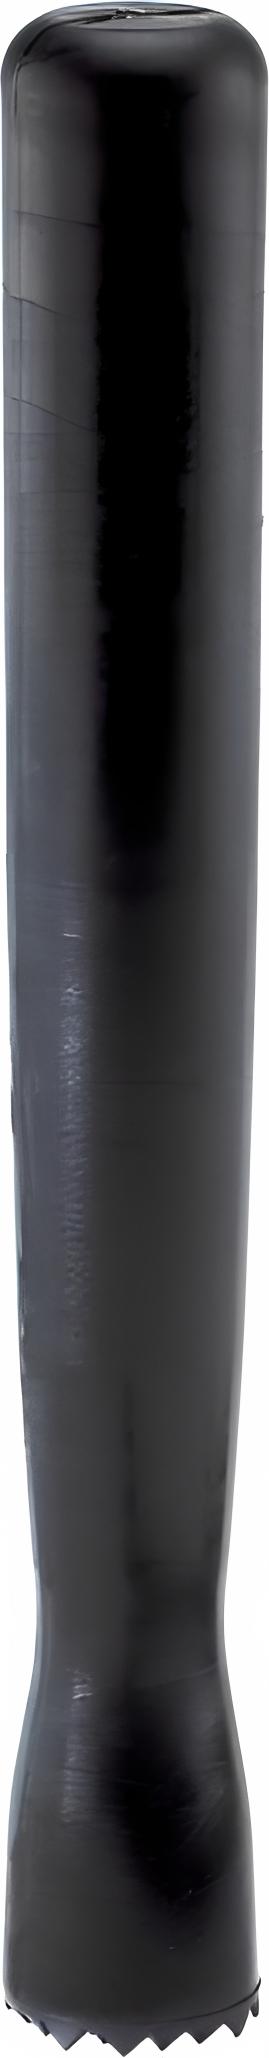 Browne - 8.25" ABS Plastic Black Muddler - 57514